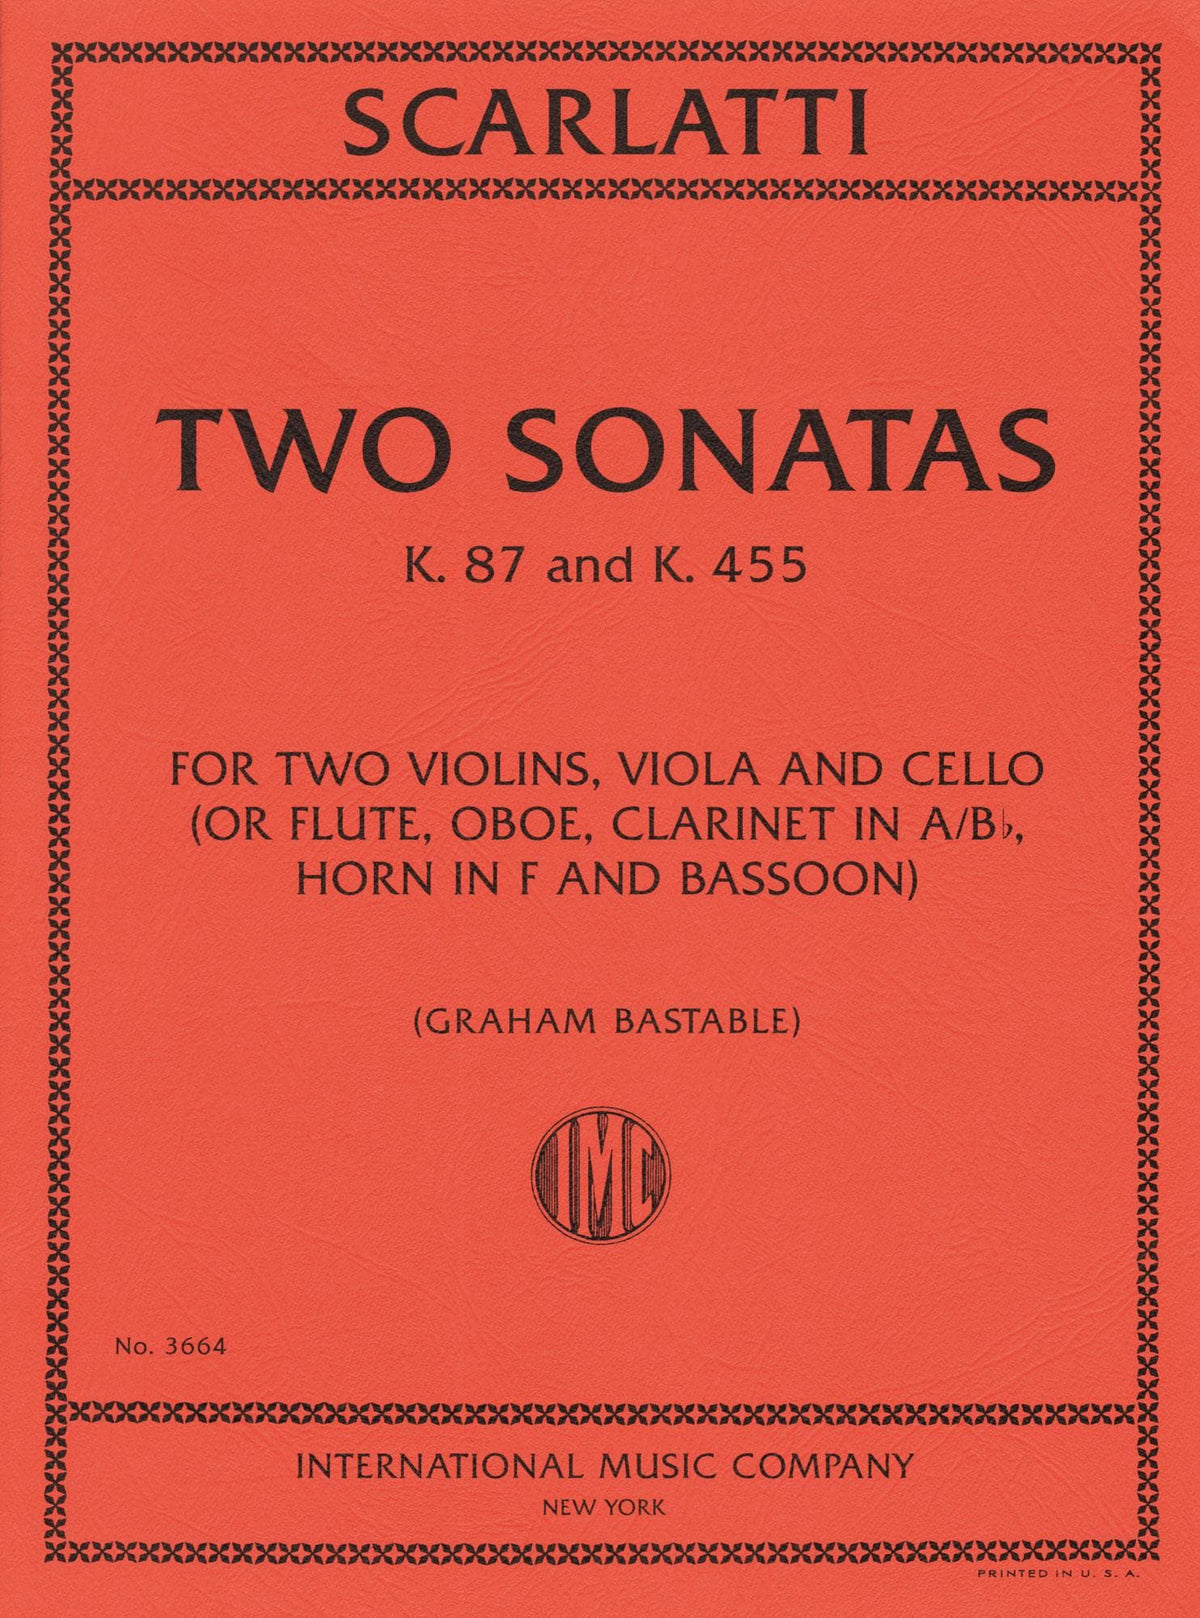 Scarlatti, Domenico - Two Sonatas, K. 87 and K. 455 - for Two Violins, Viola, and Cello - Edited by Bastable - International